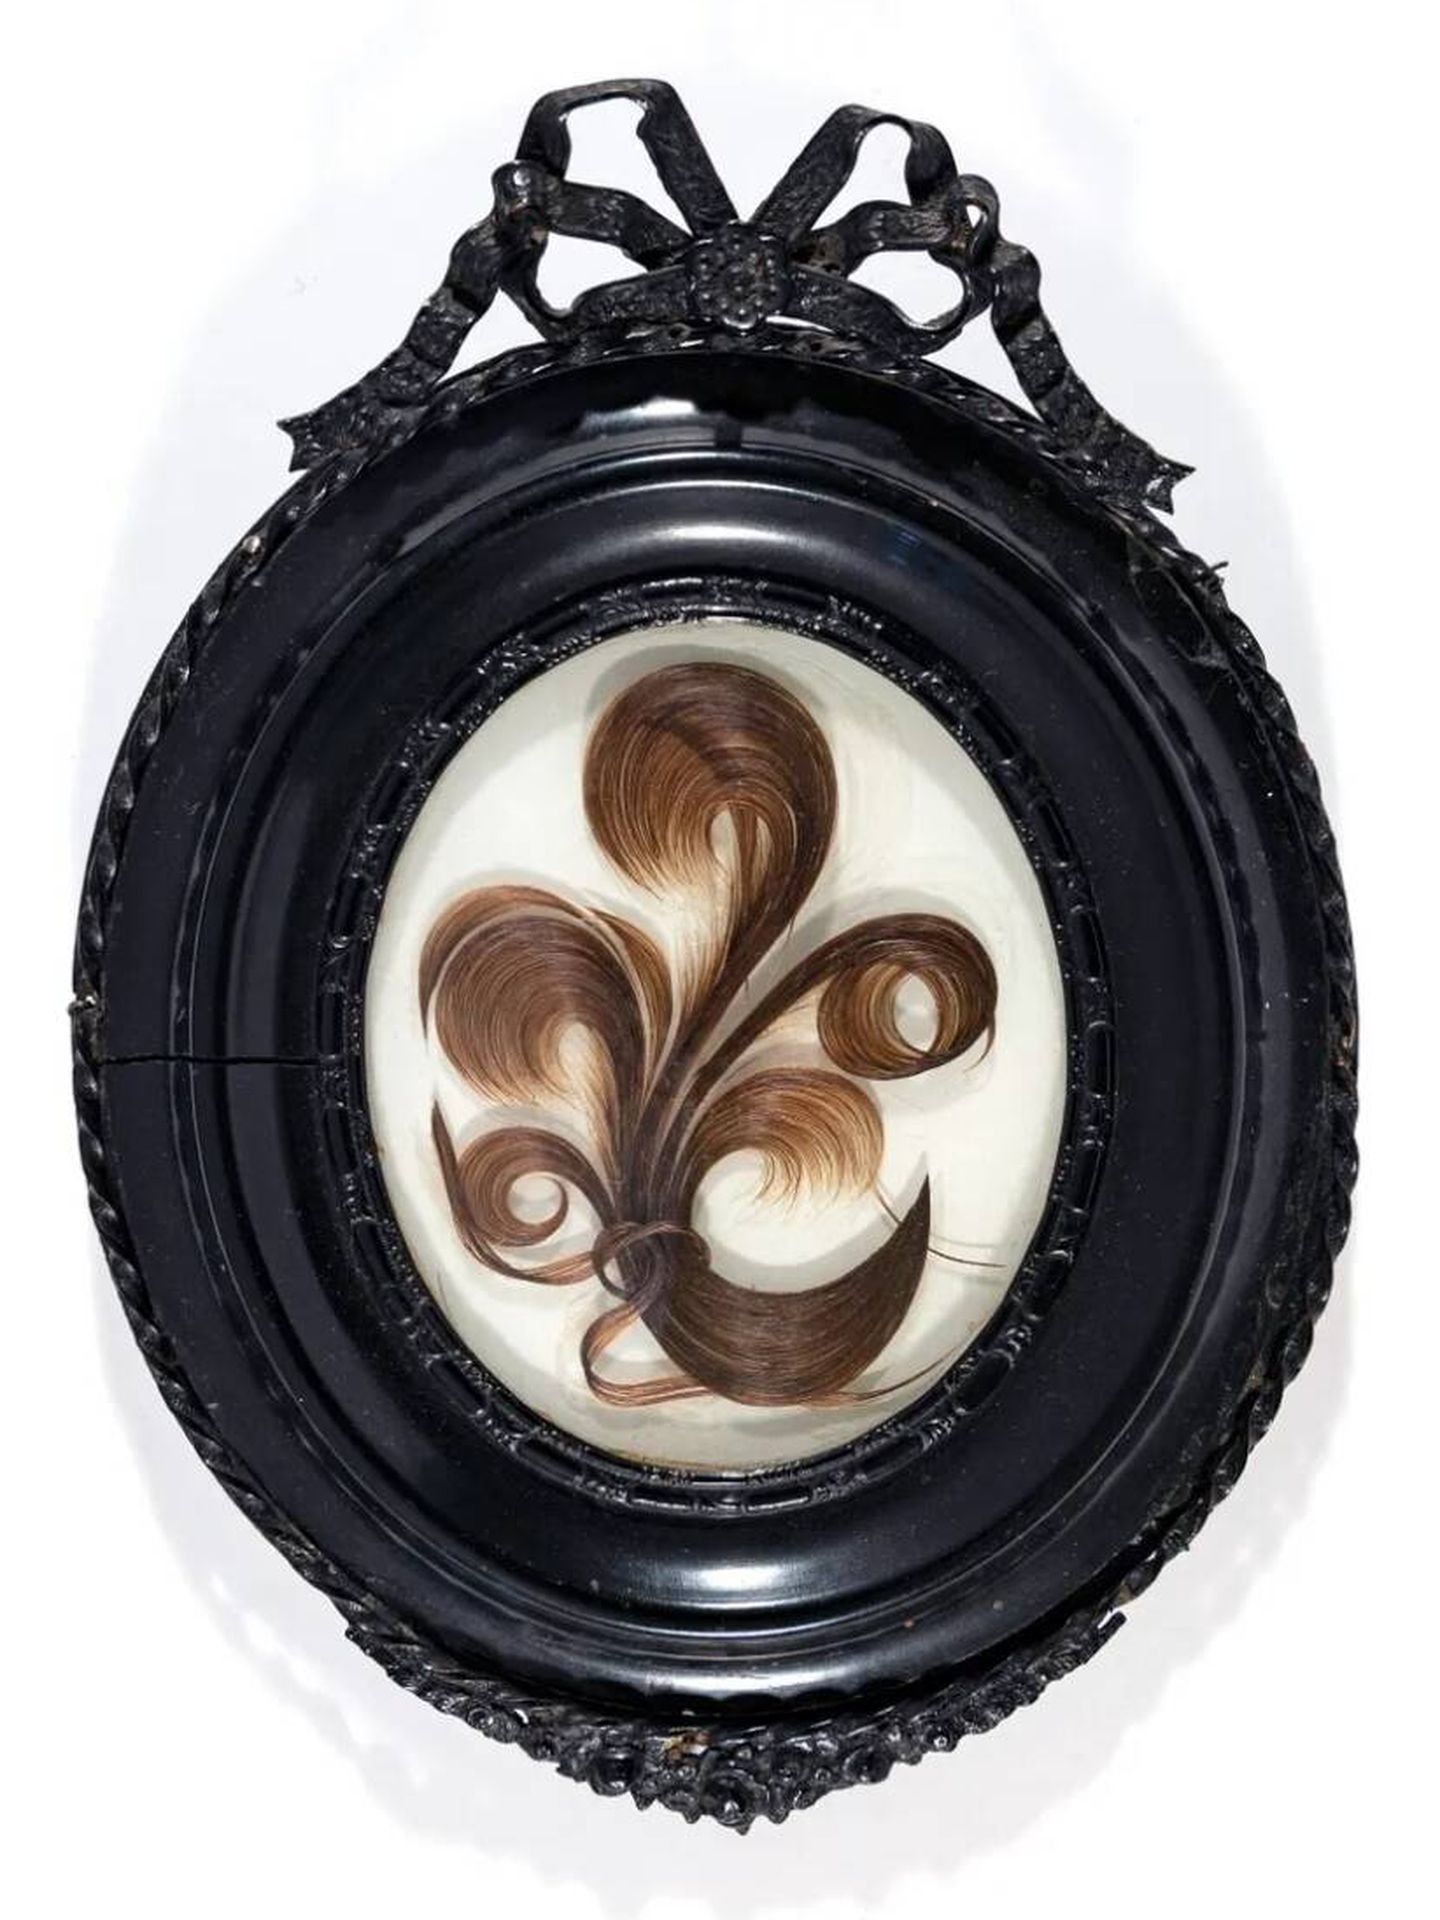 Cuadro con cabello humano. (Museo Nacional del Romanticismo)